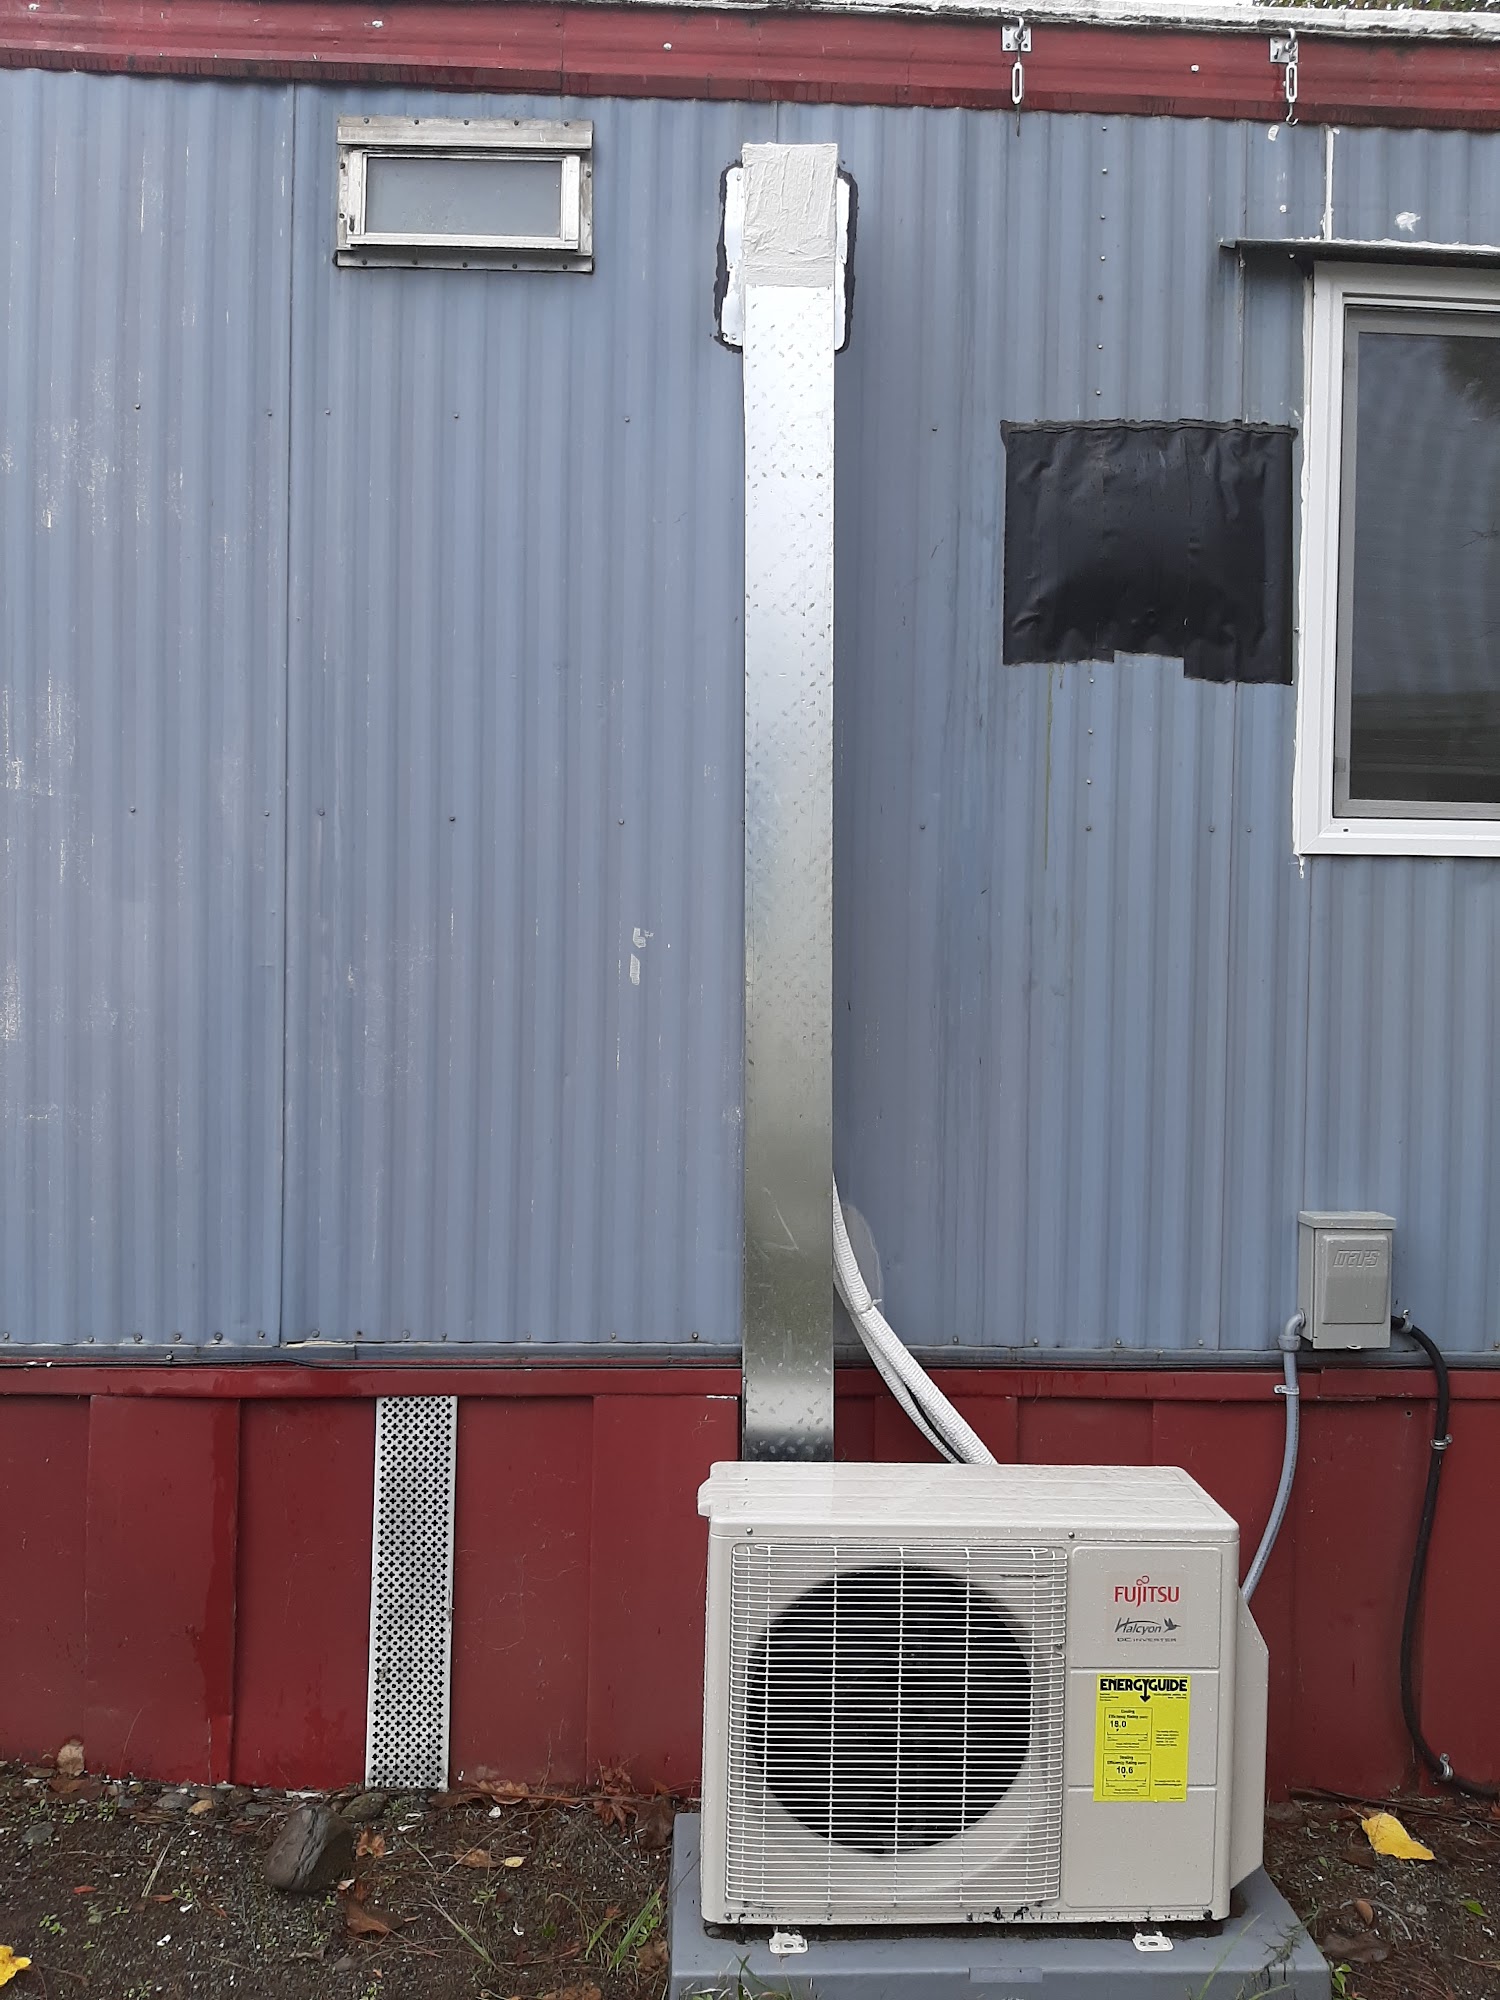 Kelly Ridge Heating & Air Conditioning